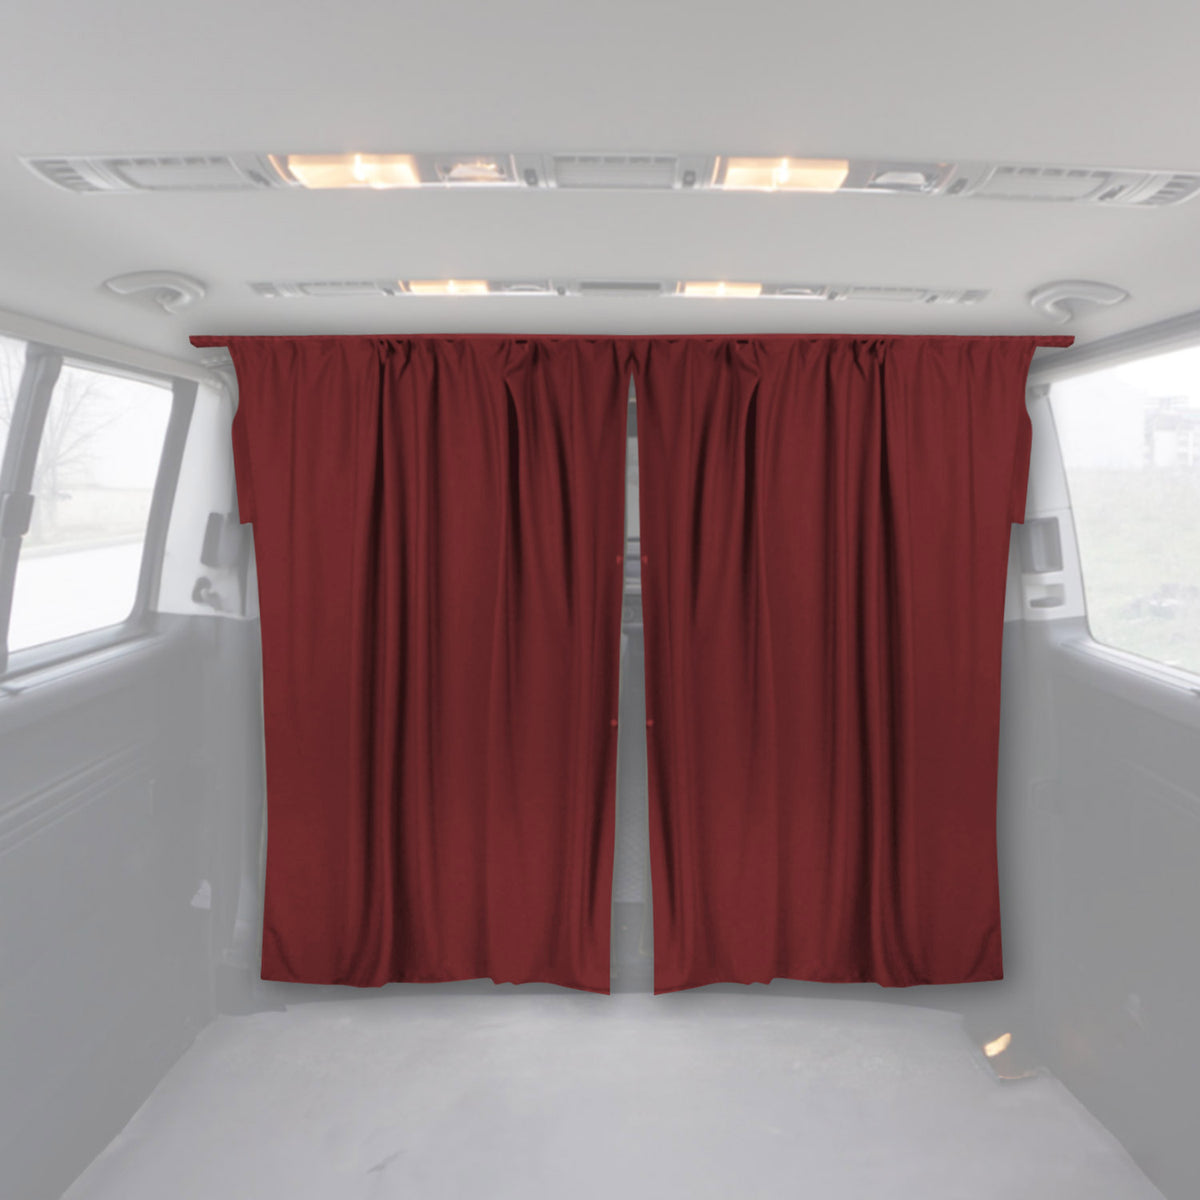 Fahrerhaus Führerhaus Gardinen Sonnenschutz für VW Grand California H3 Rot 2tlg